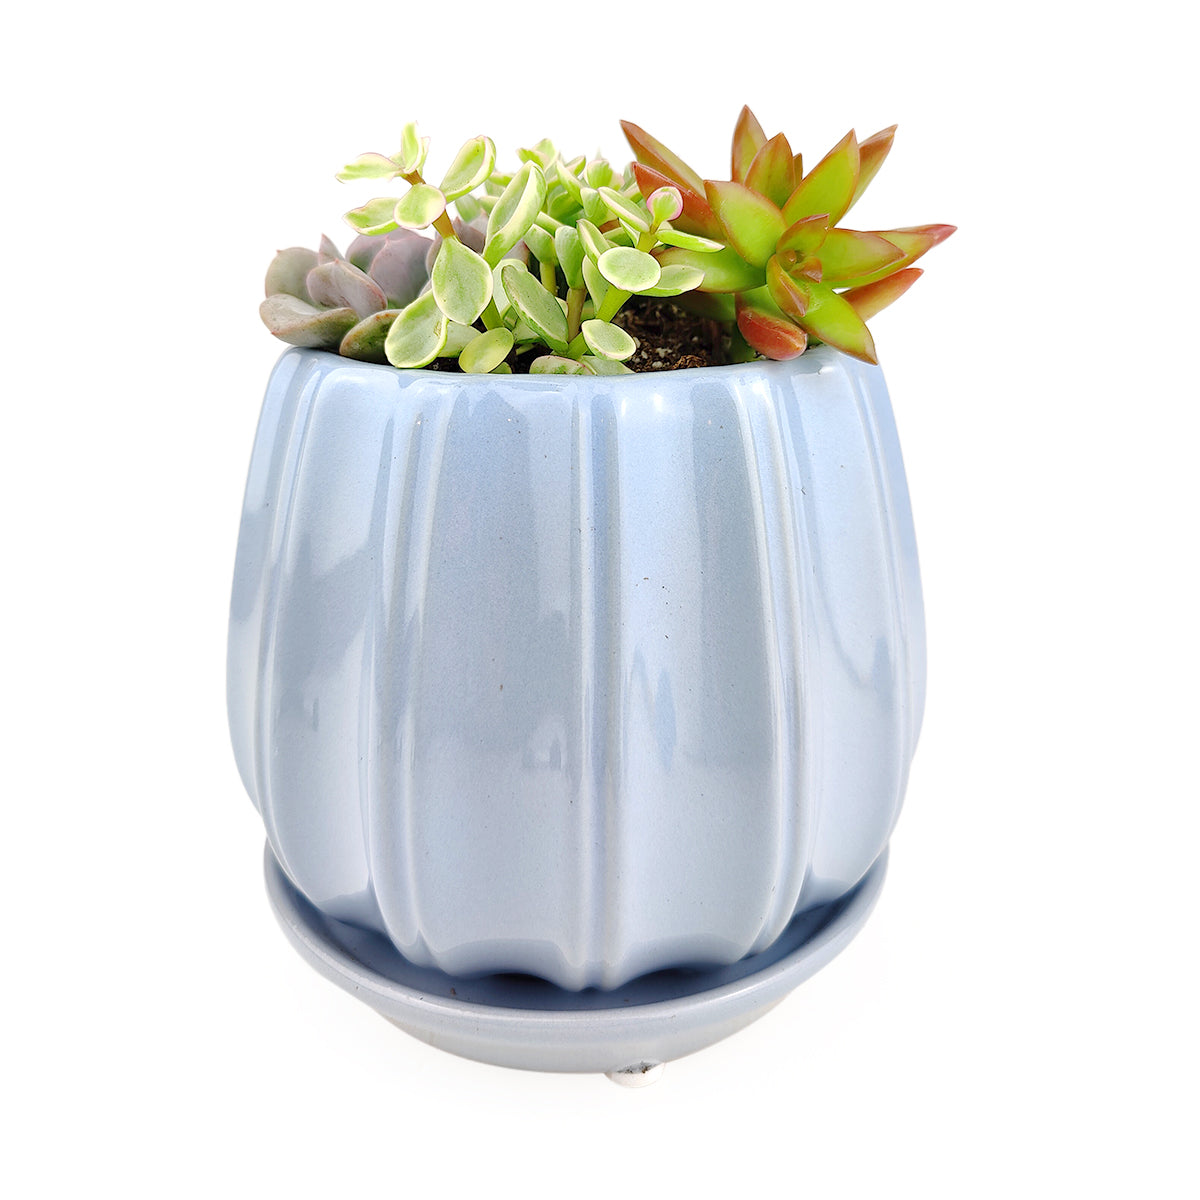 Succulent Arrangement in Ceramic Pot, rosette succulents, colorful succulents, stunning succulent arrangement for home and office decor